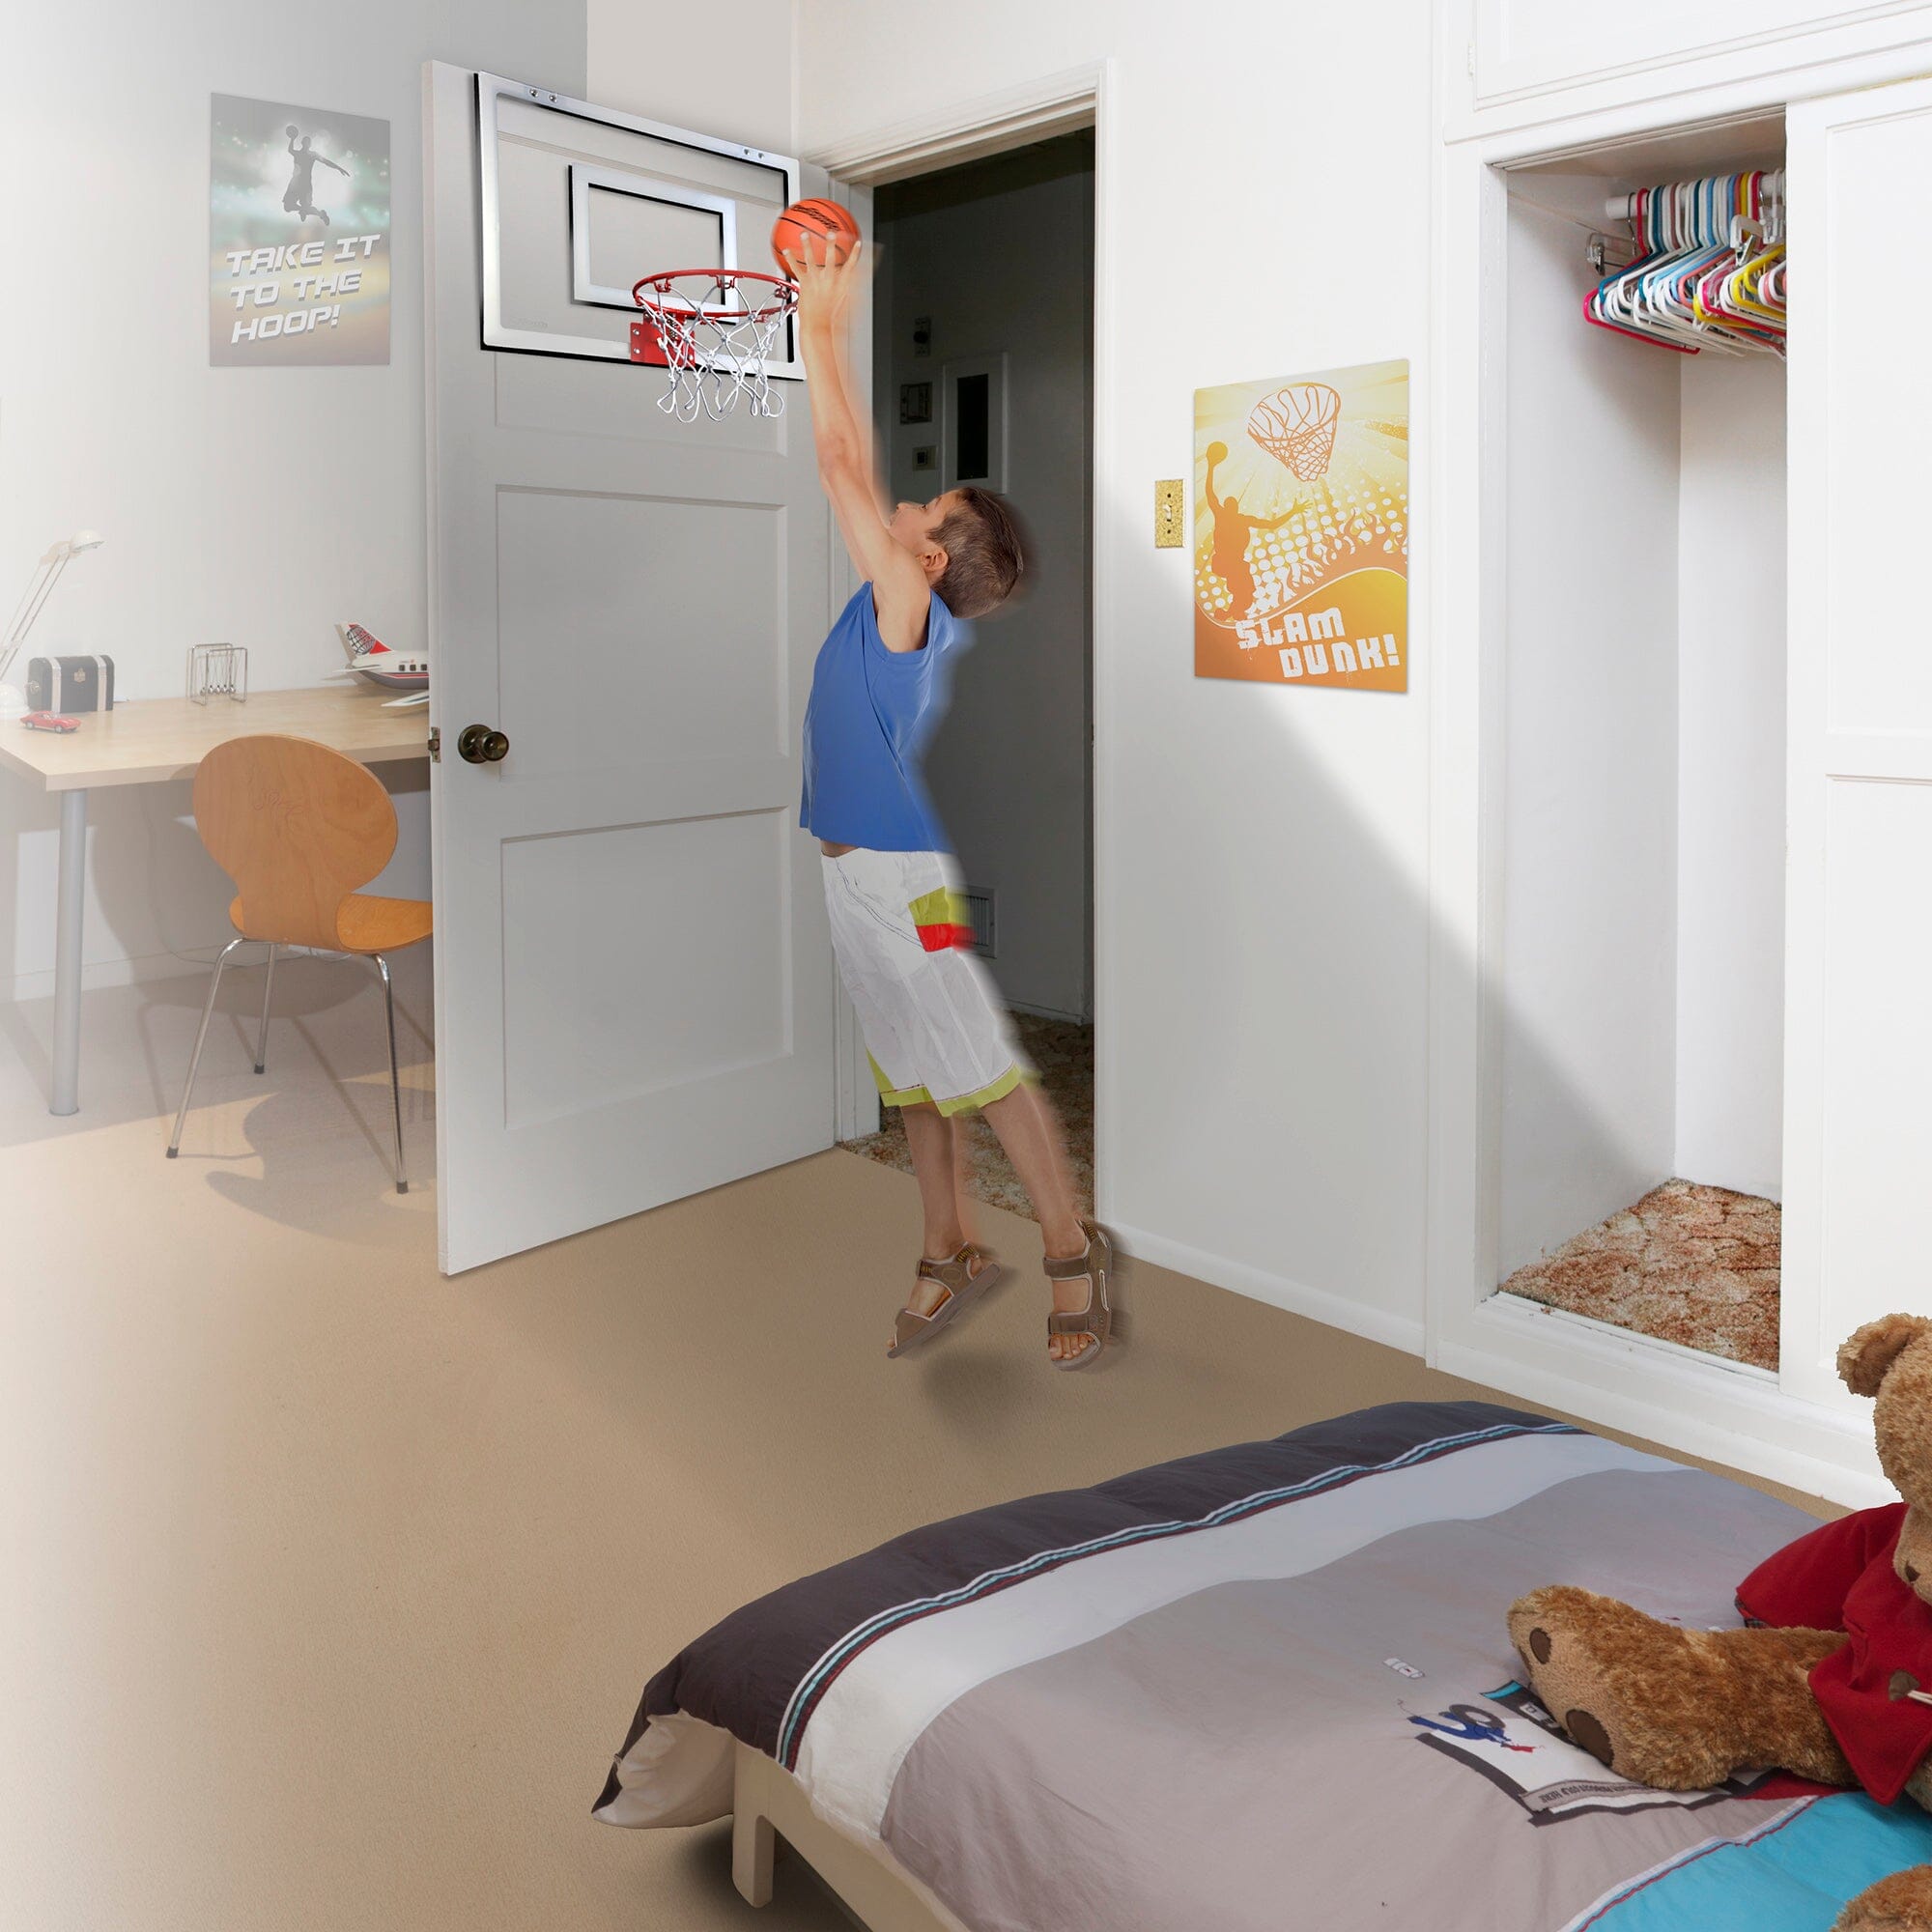 mini basketball hoop for bedroom